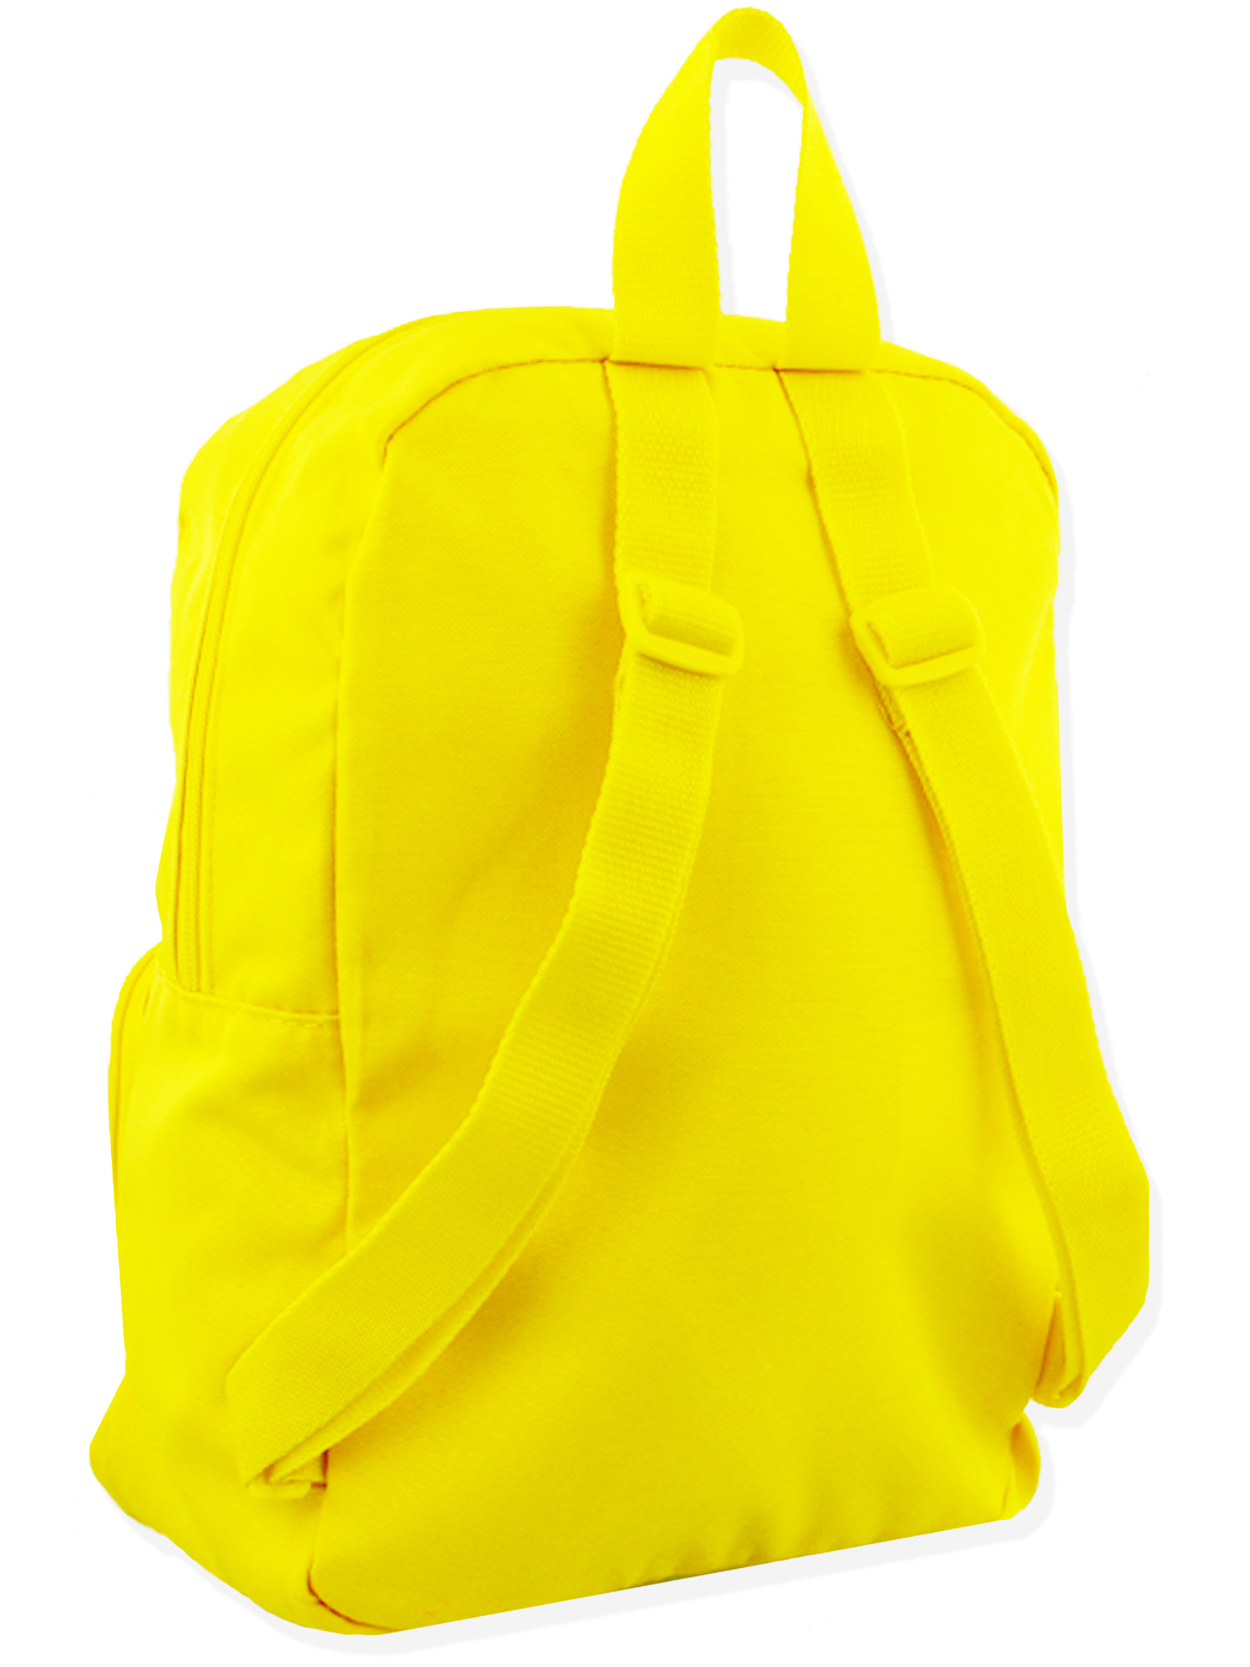 John Deere Chick Toddler 13 inch Yellow Mini Backpack JFL869YT - image 2 of 5